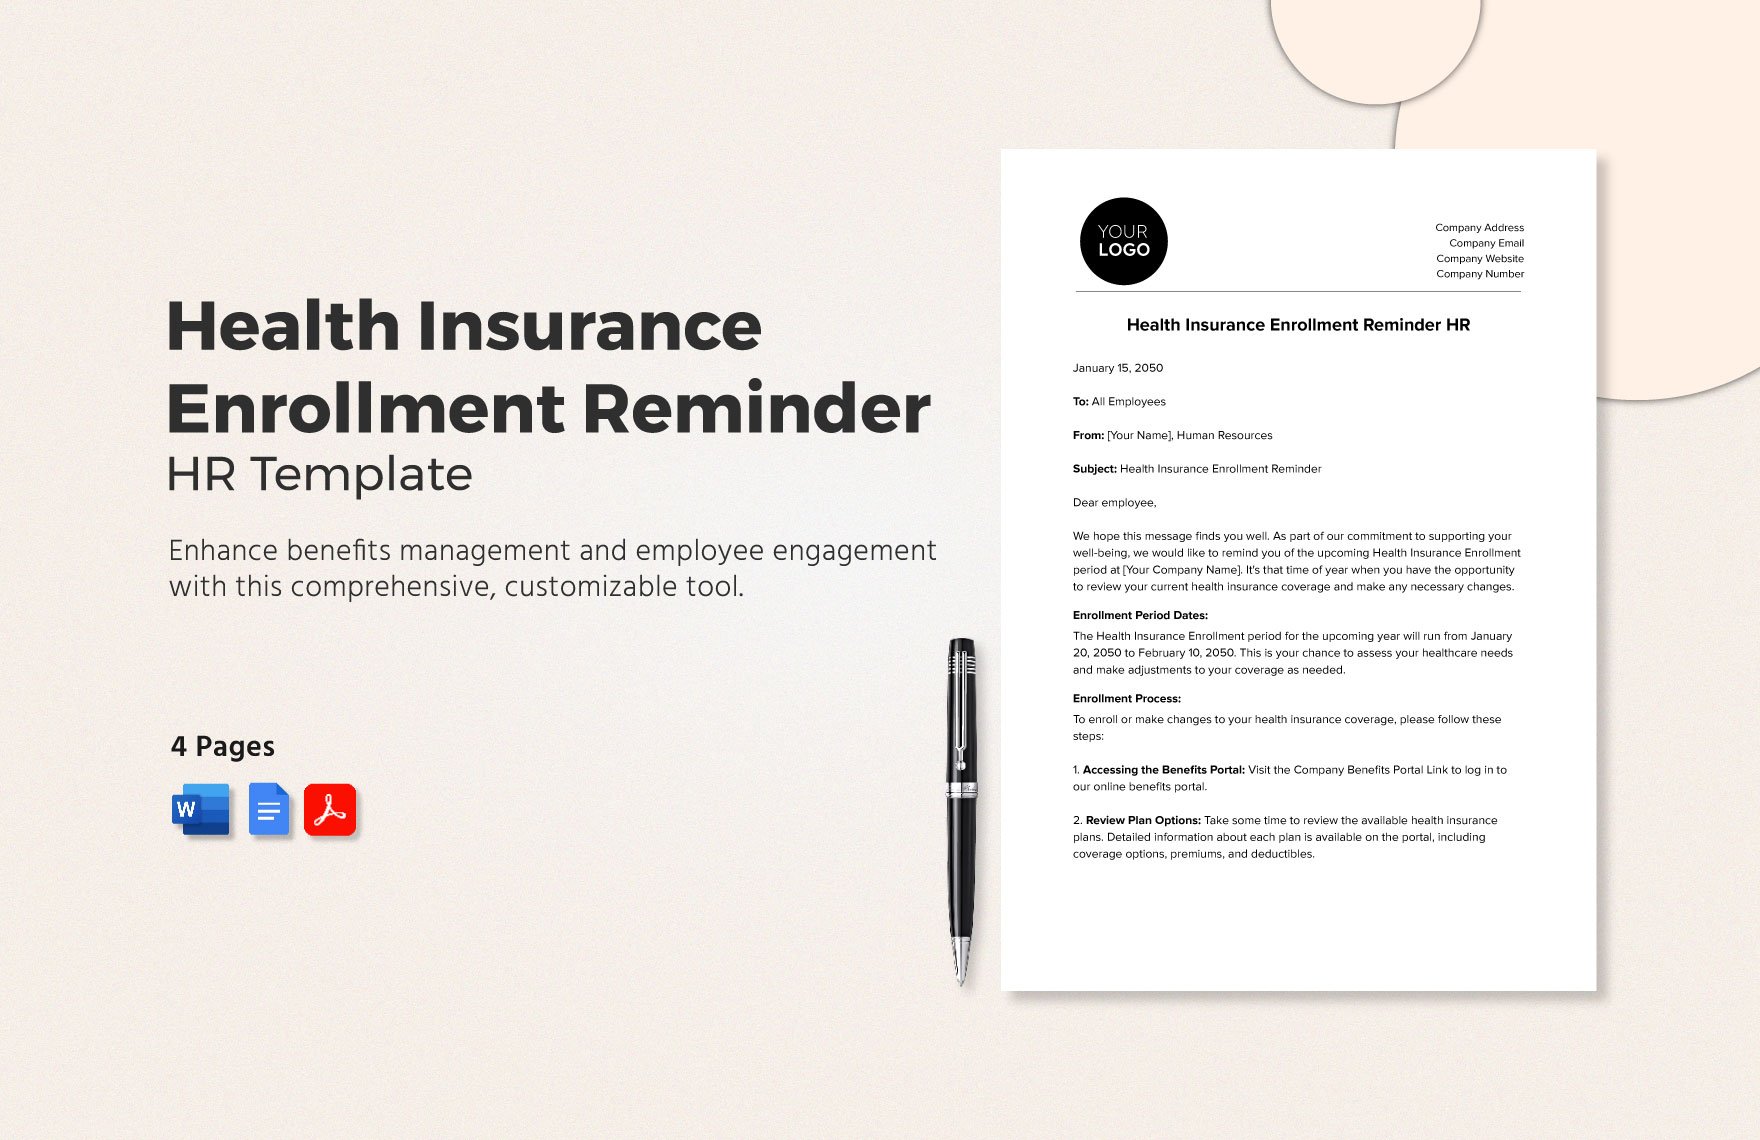 Health Insurance Enrollment Reminder HR Template